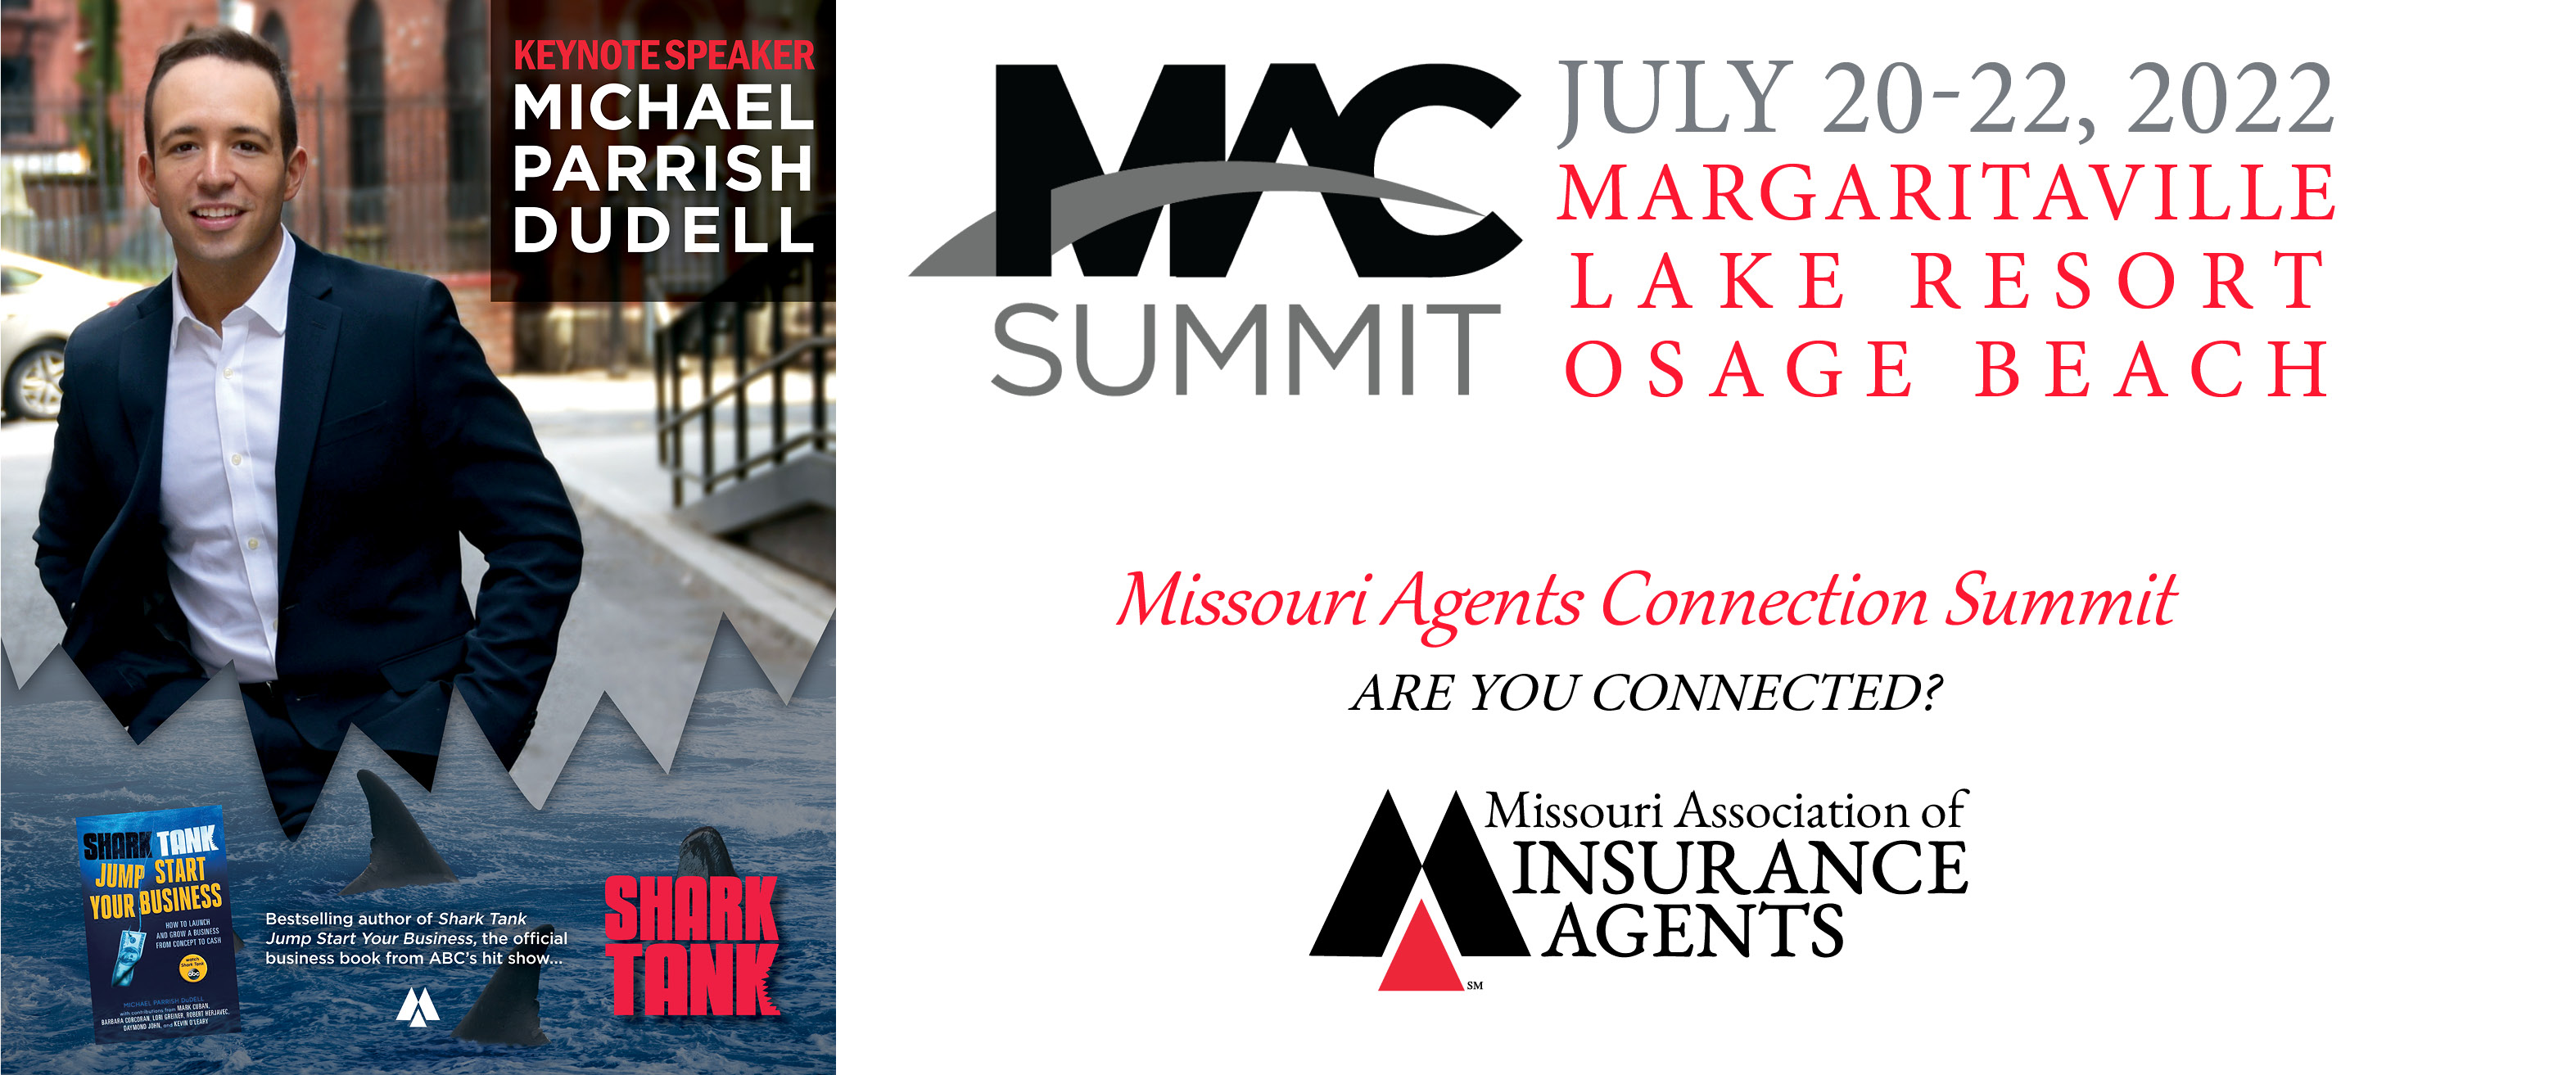 Missouri Agents Connection Summit